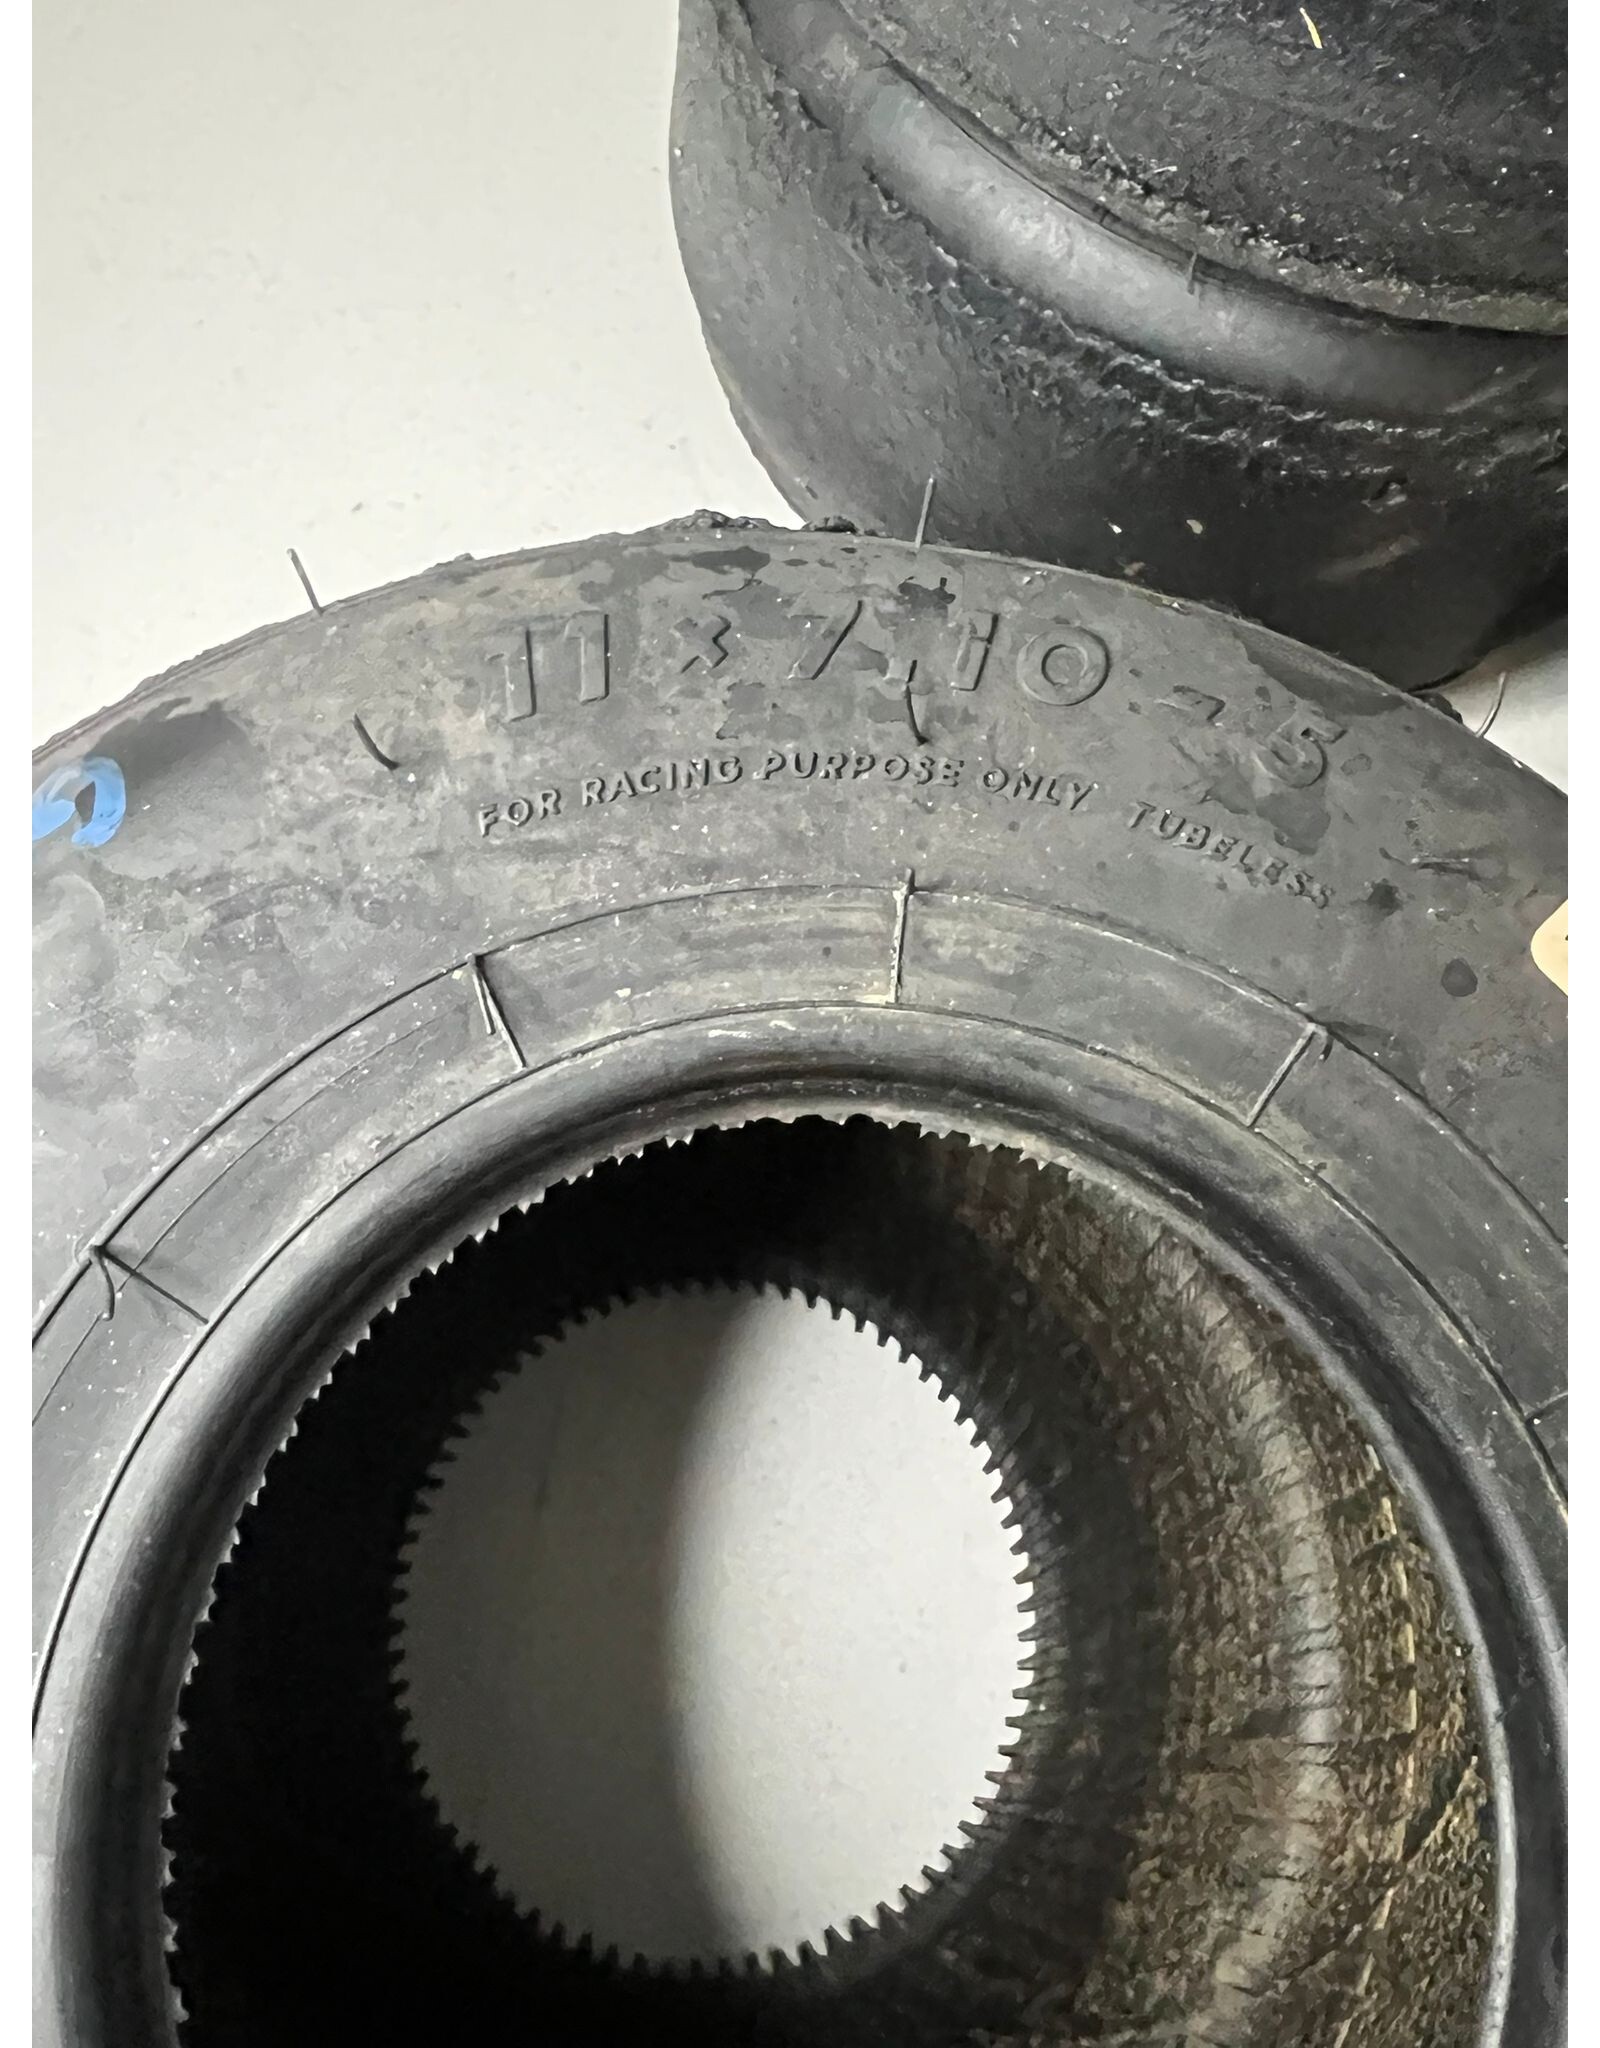 Used MG SH Tire set 4.6/7.1